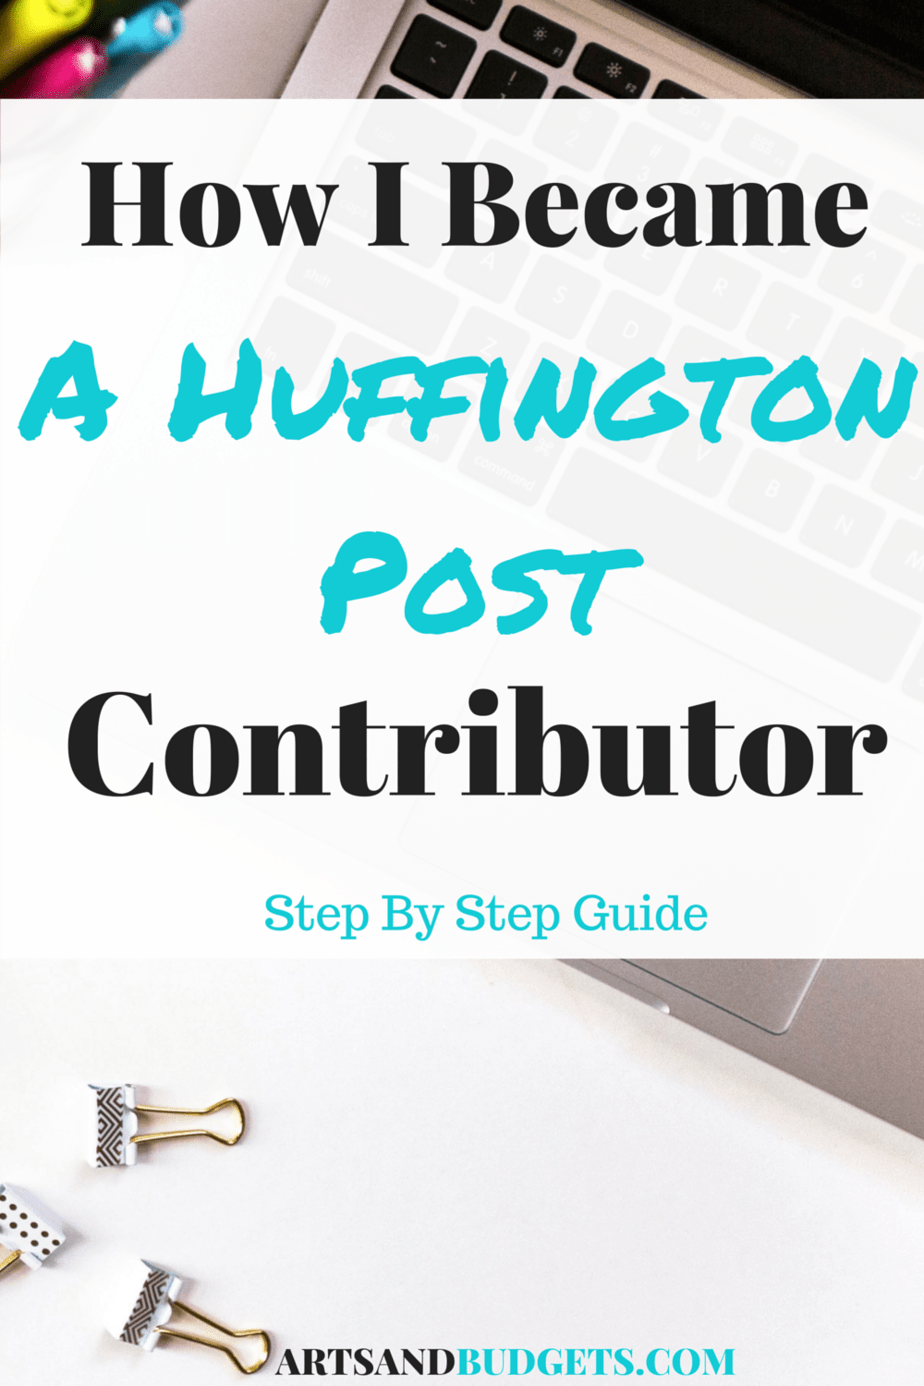 Huffington Post Arts Logo - How I Became A Huffington Post Contributor and Budgets